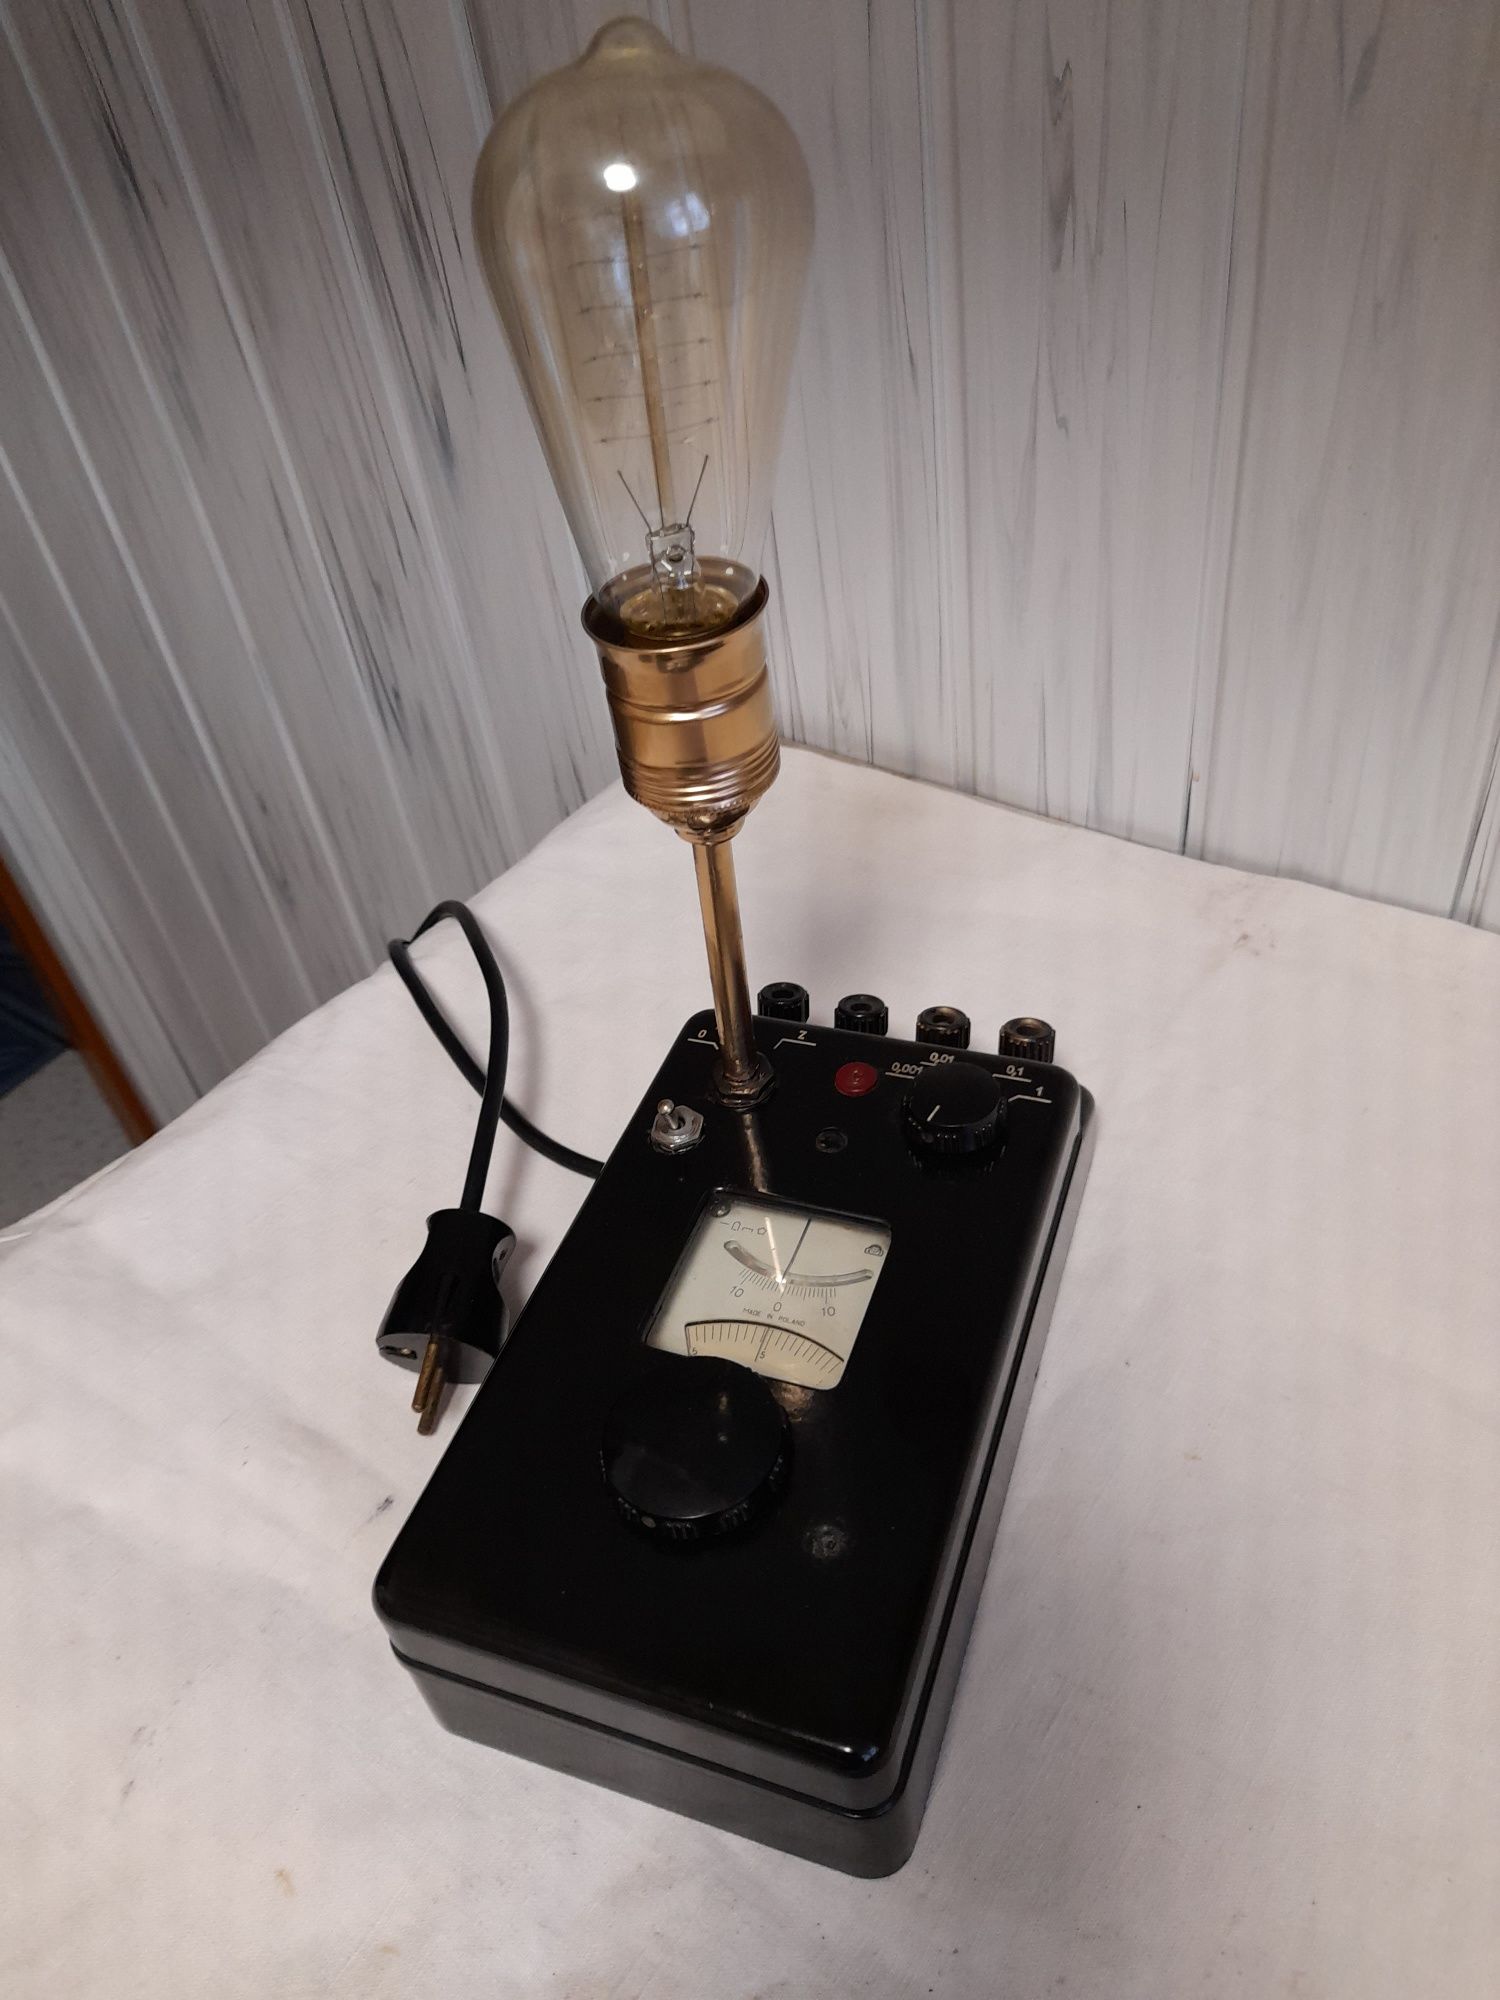 Lampa Edison  stary miernik  mostek  Thompsona  TMT  2 bakielit